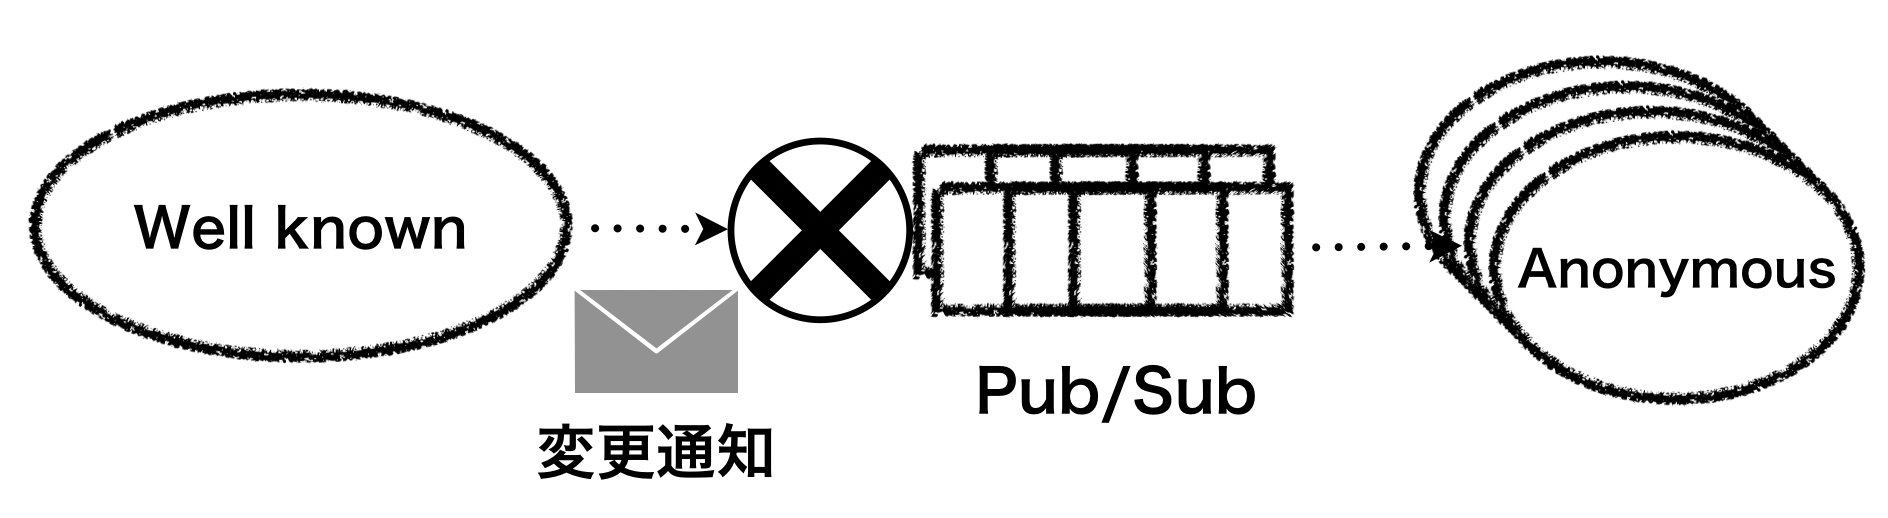 Pub/Sub